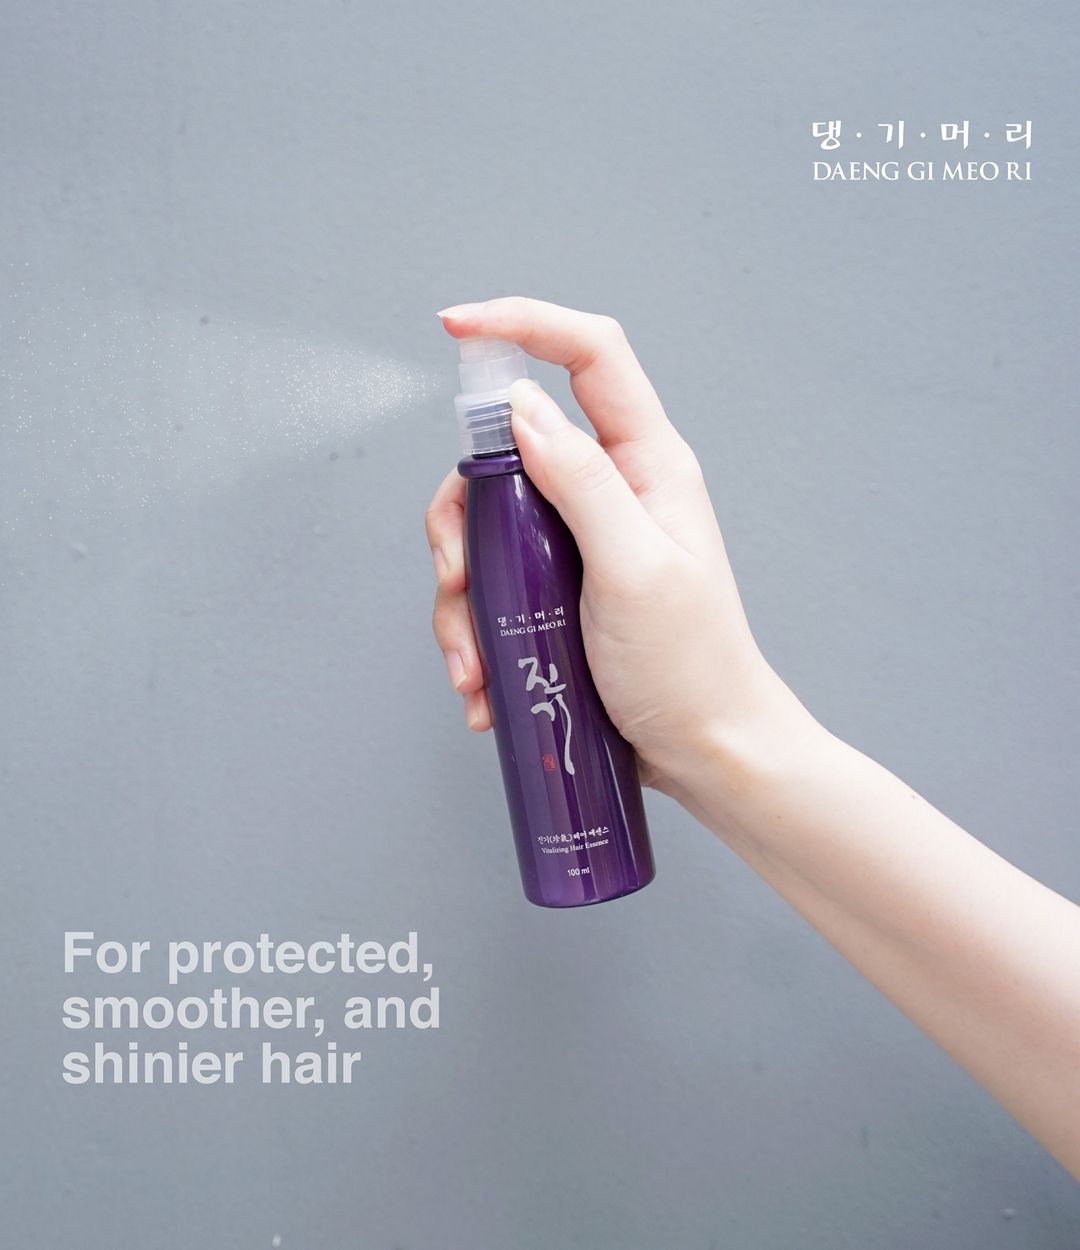 Vitalizing Hair Essence (Spray type)